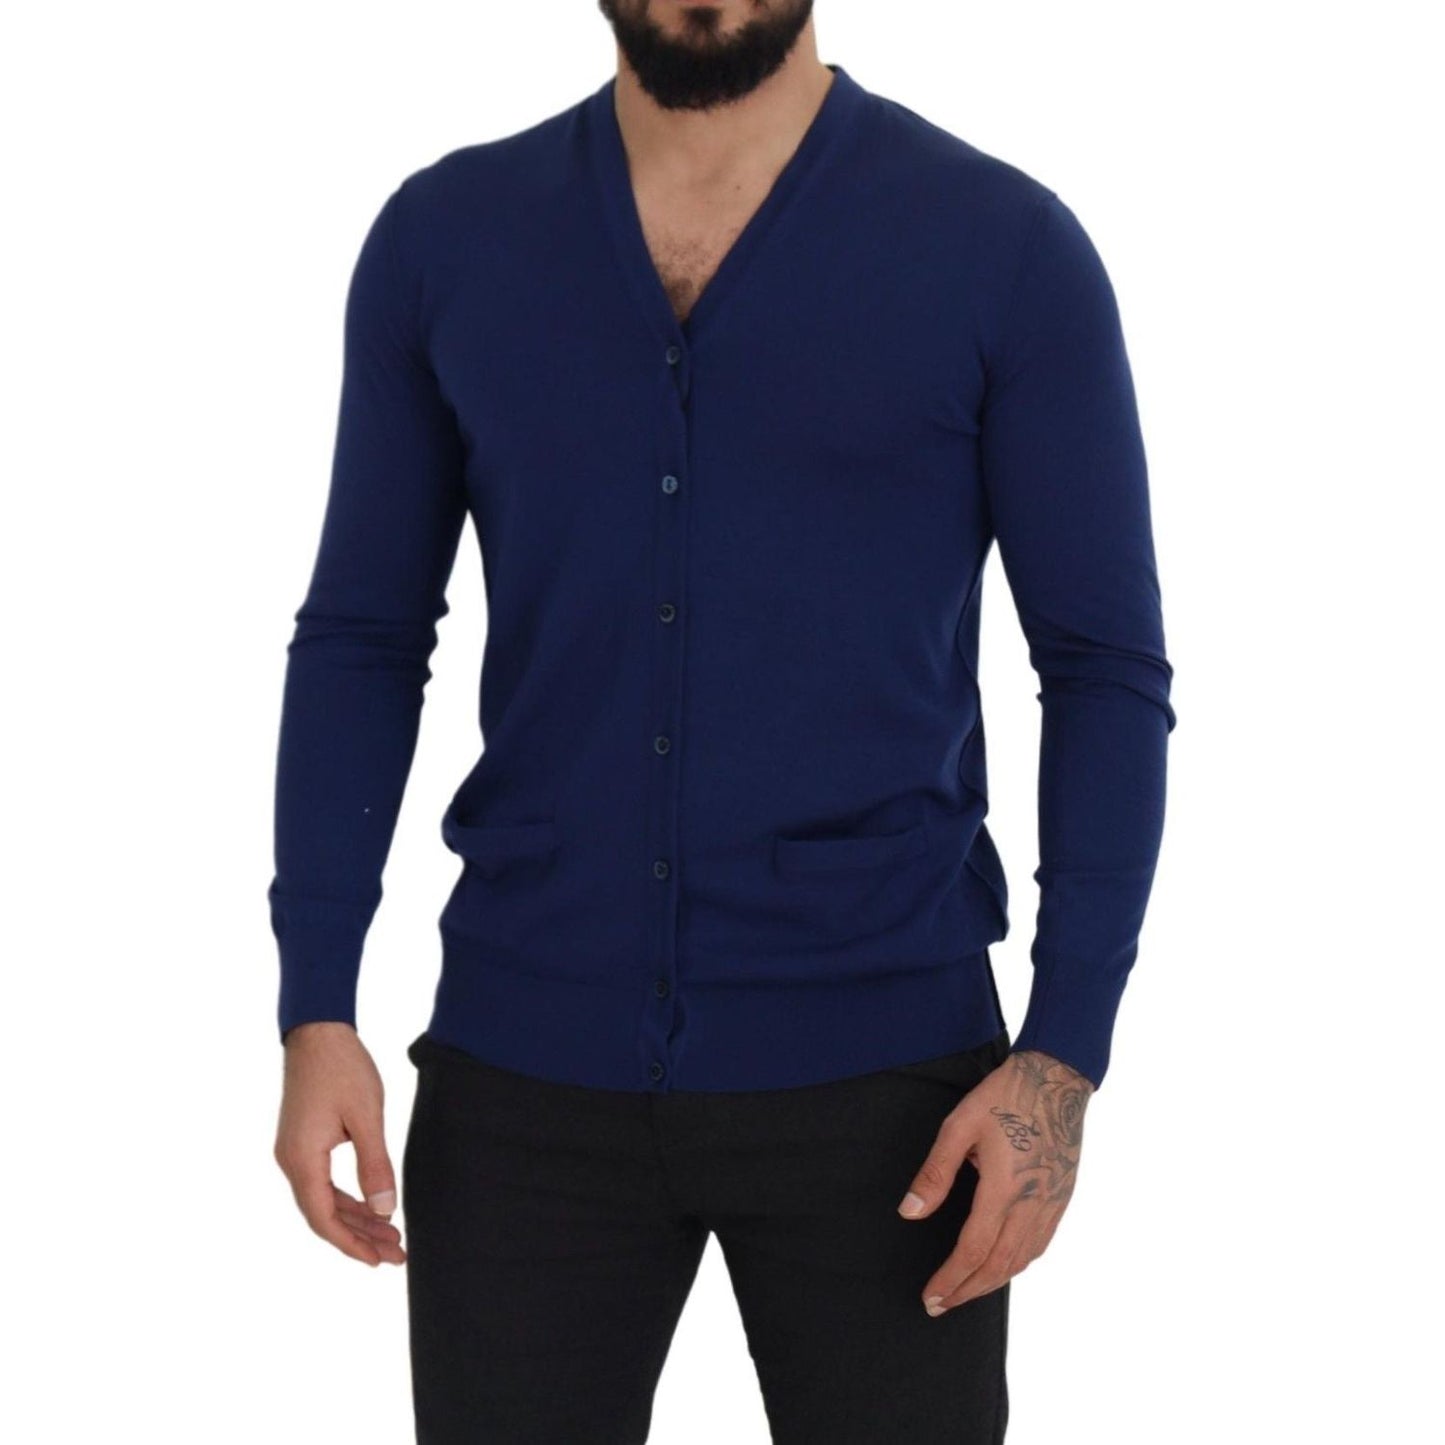 Dolce & Gabbana Elegant Virgin Wool Blue Cardigan Sweater blue-wool-v-neck-button-down-cardigan-sweater